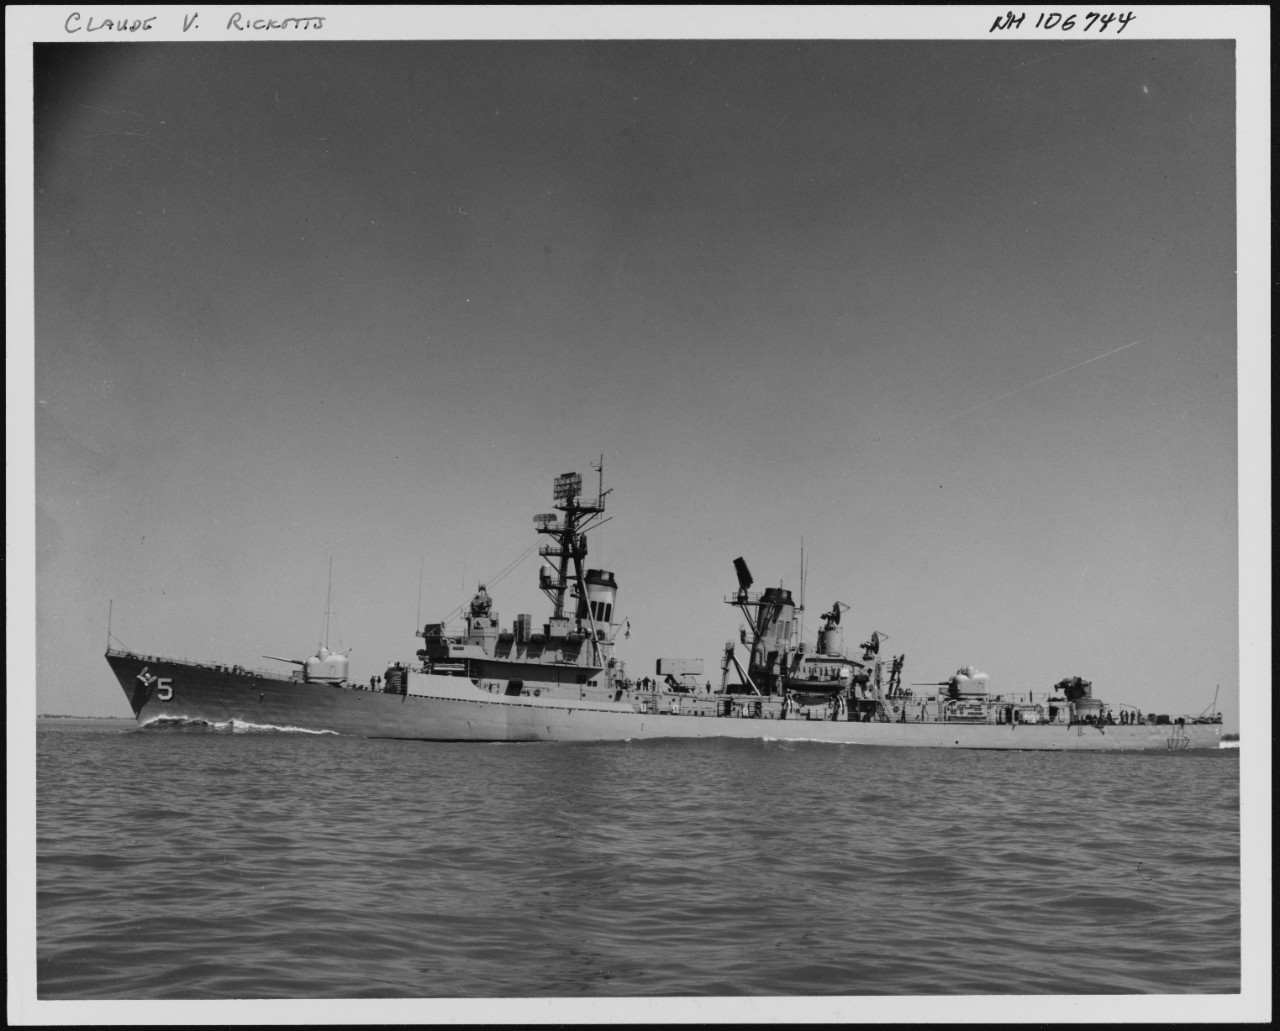 Photo # NH 106744  USS Biddle